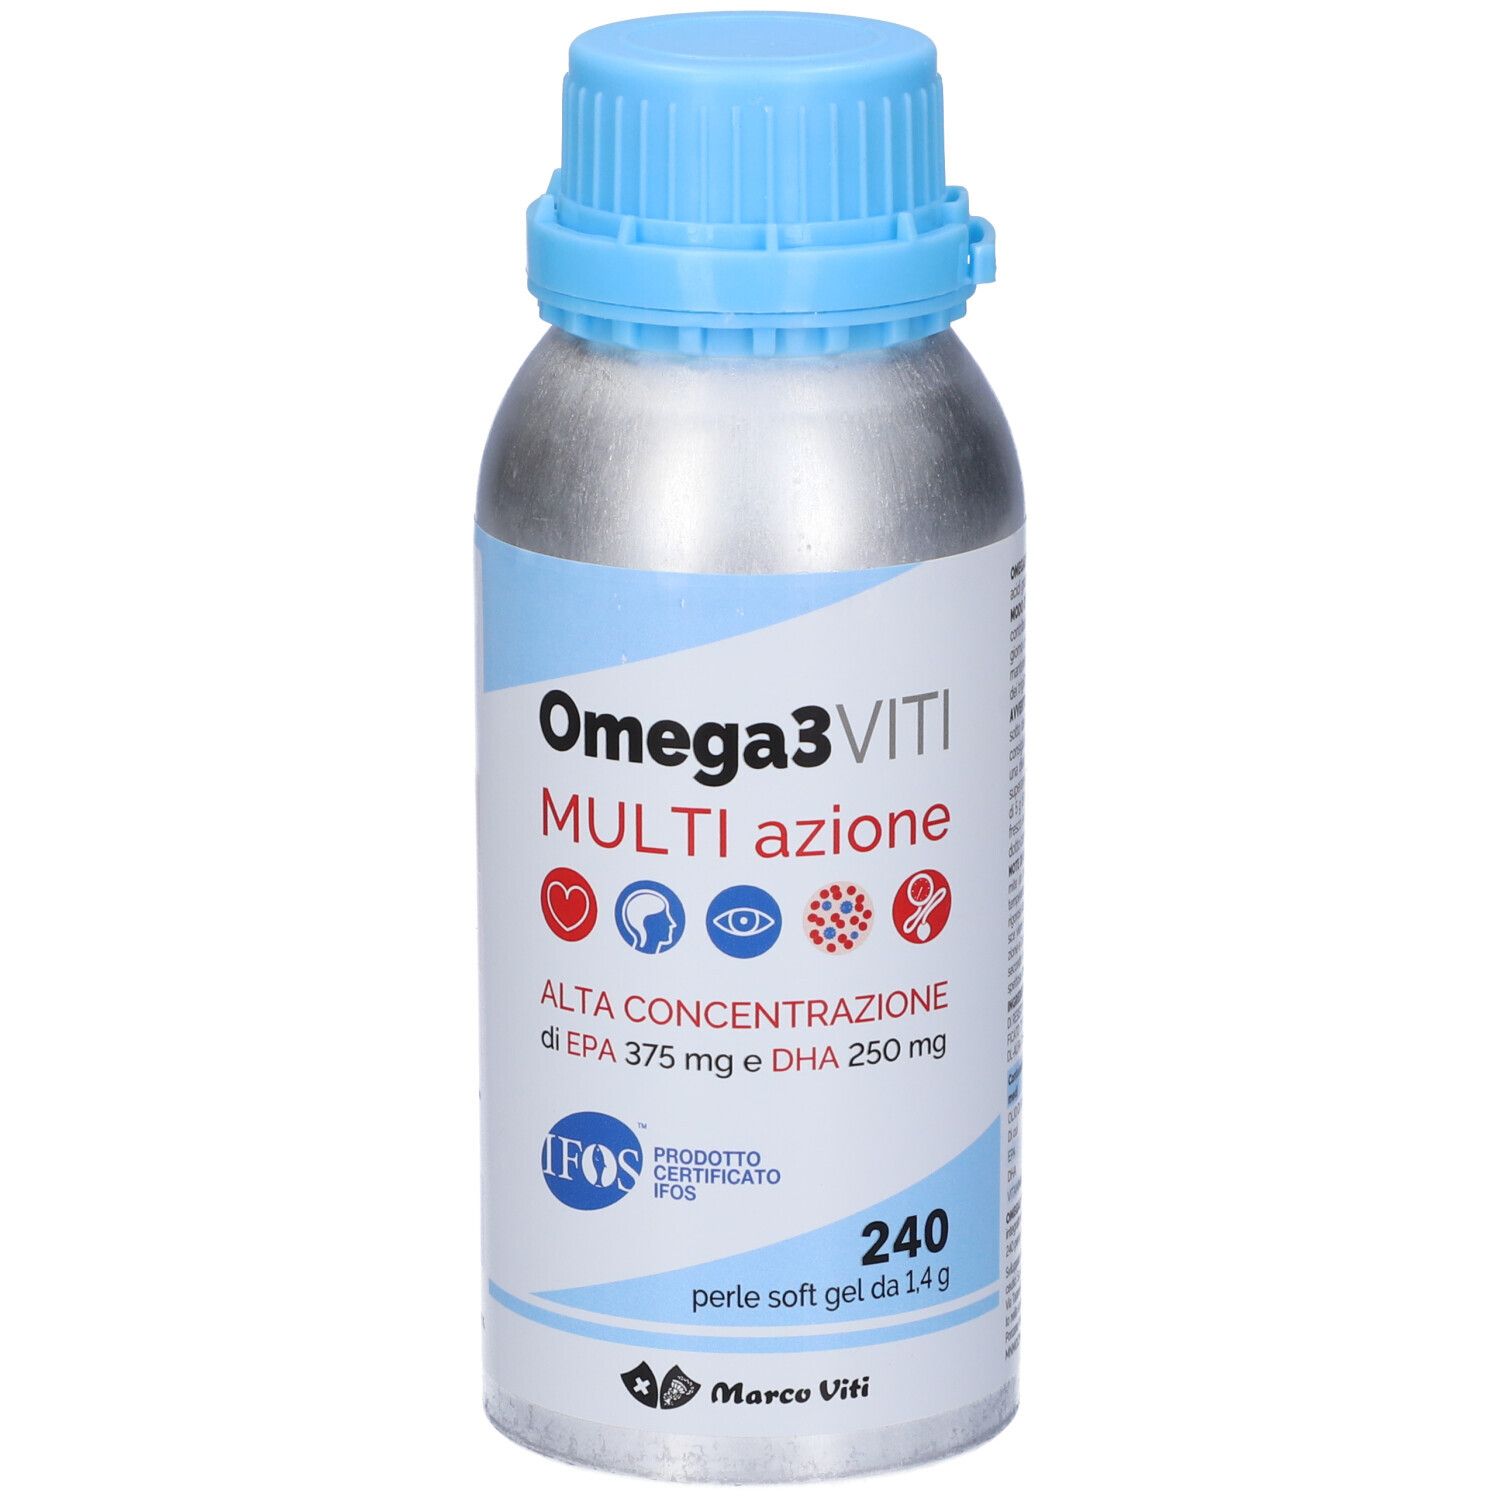 Image of Omega 3 Viti Multi Azione Marco Viti 240 Perle Soft Gel